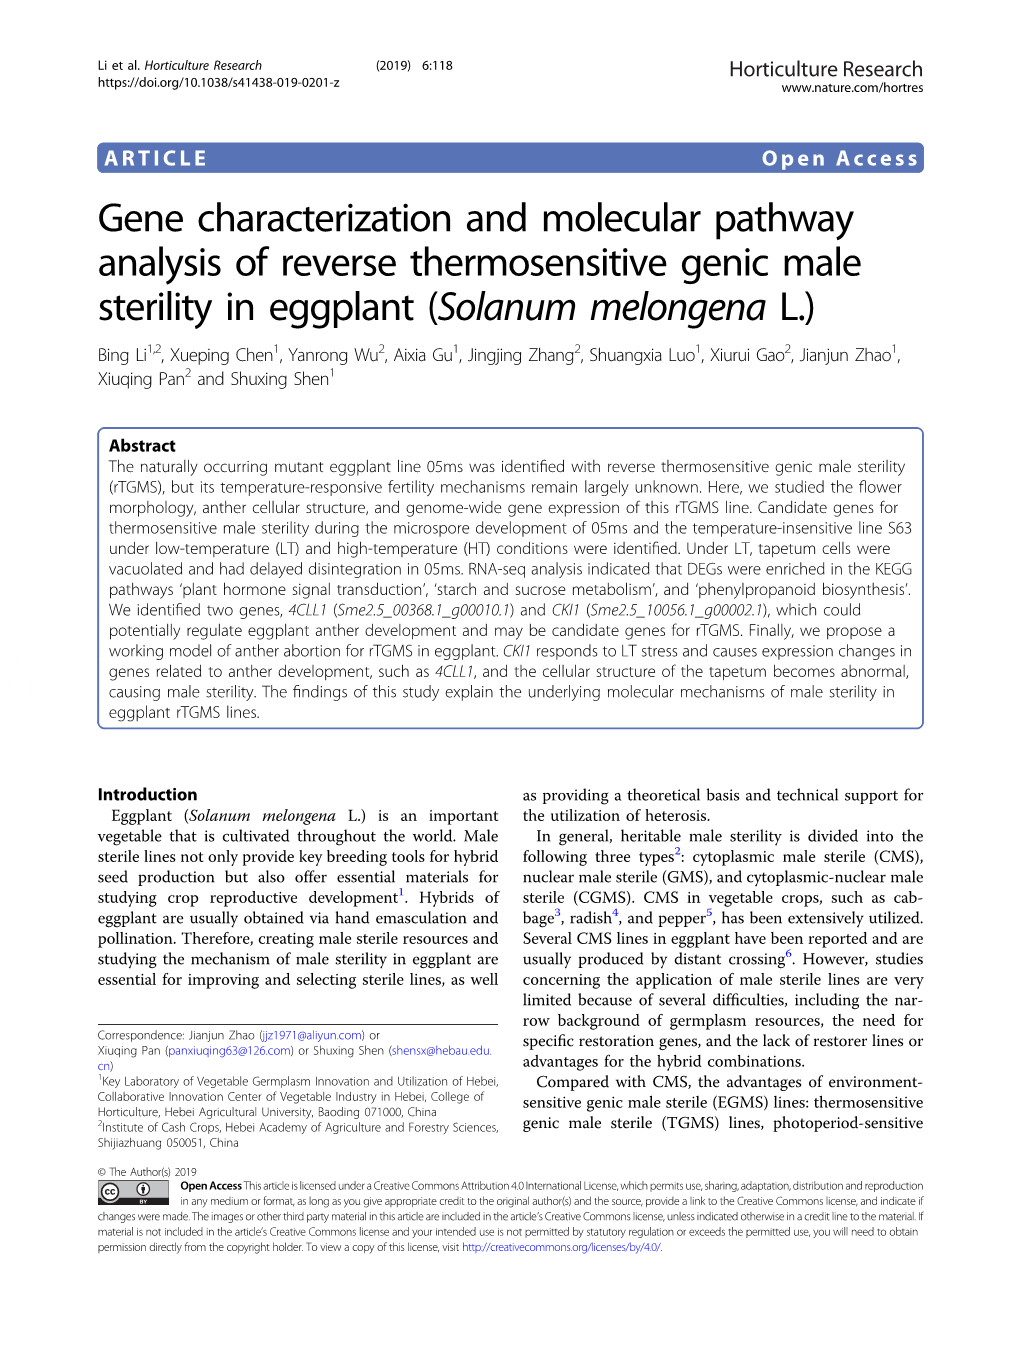 Gene Characterization and Molecular Pathway Analysis Of